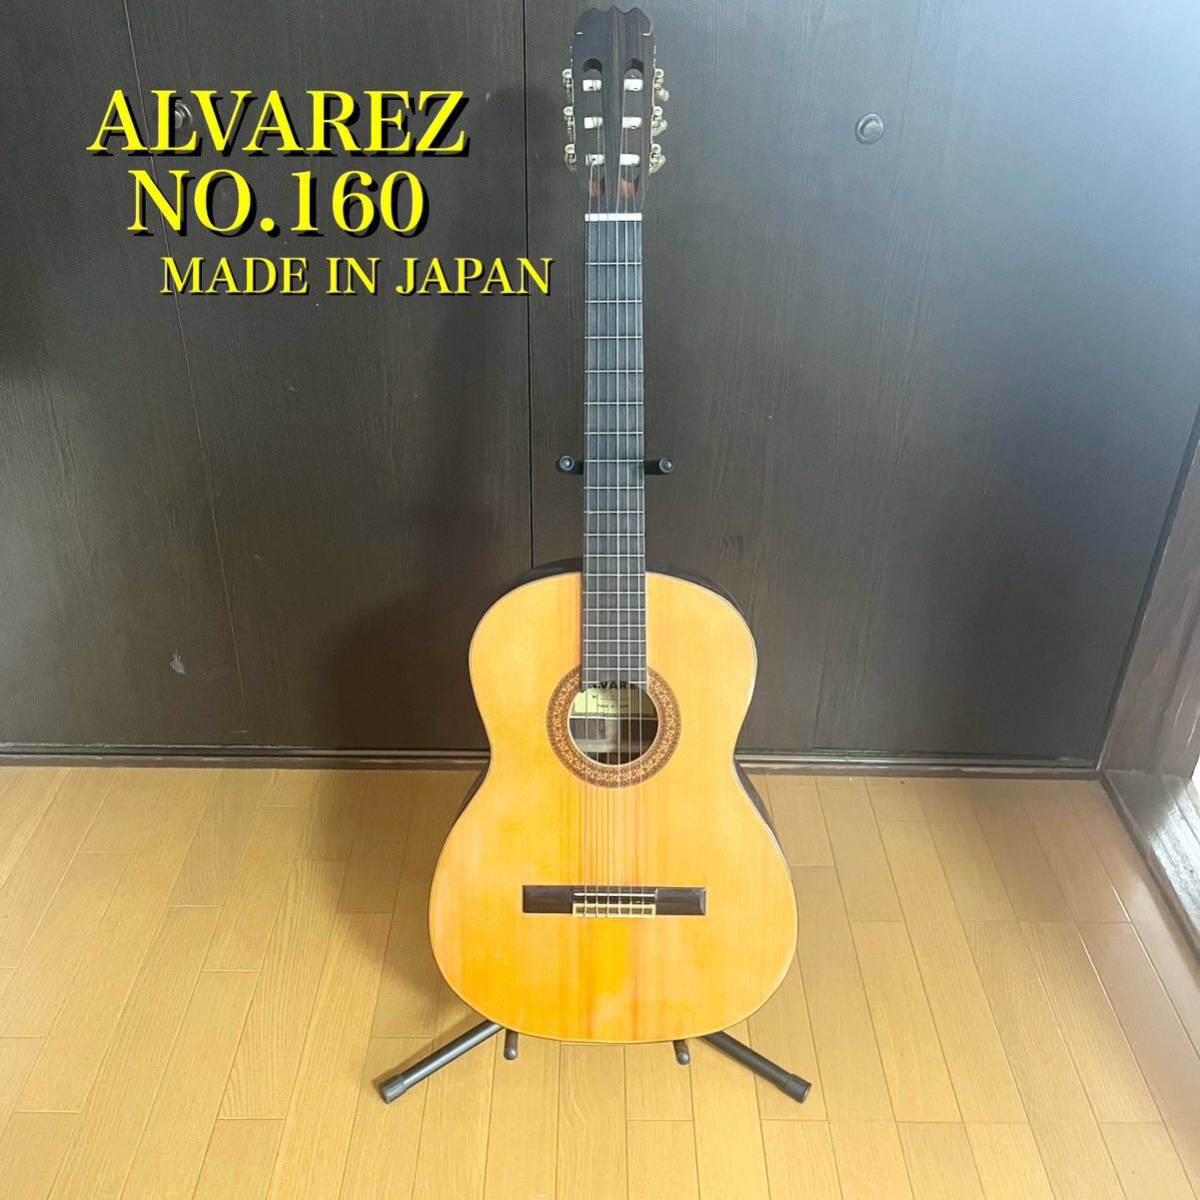 Alvarez アルバレス クラシックギター NO.160